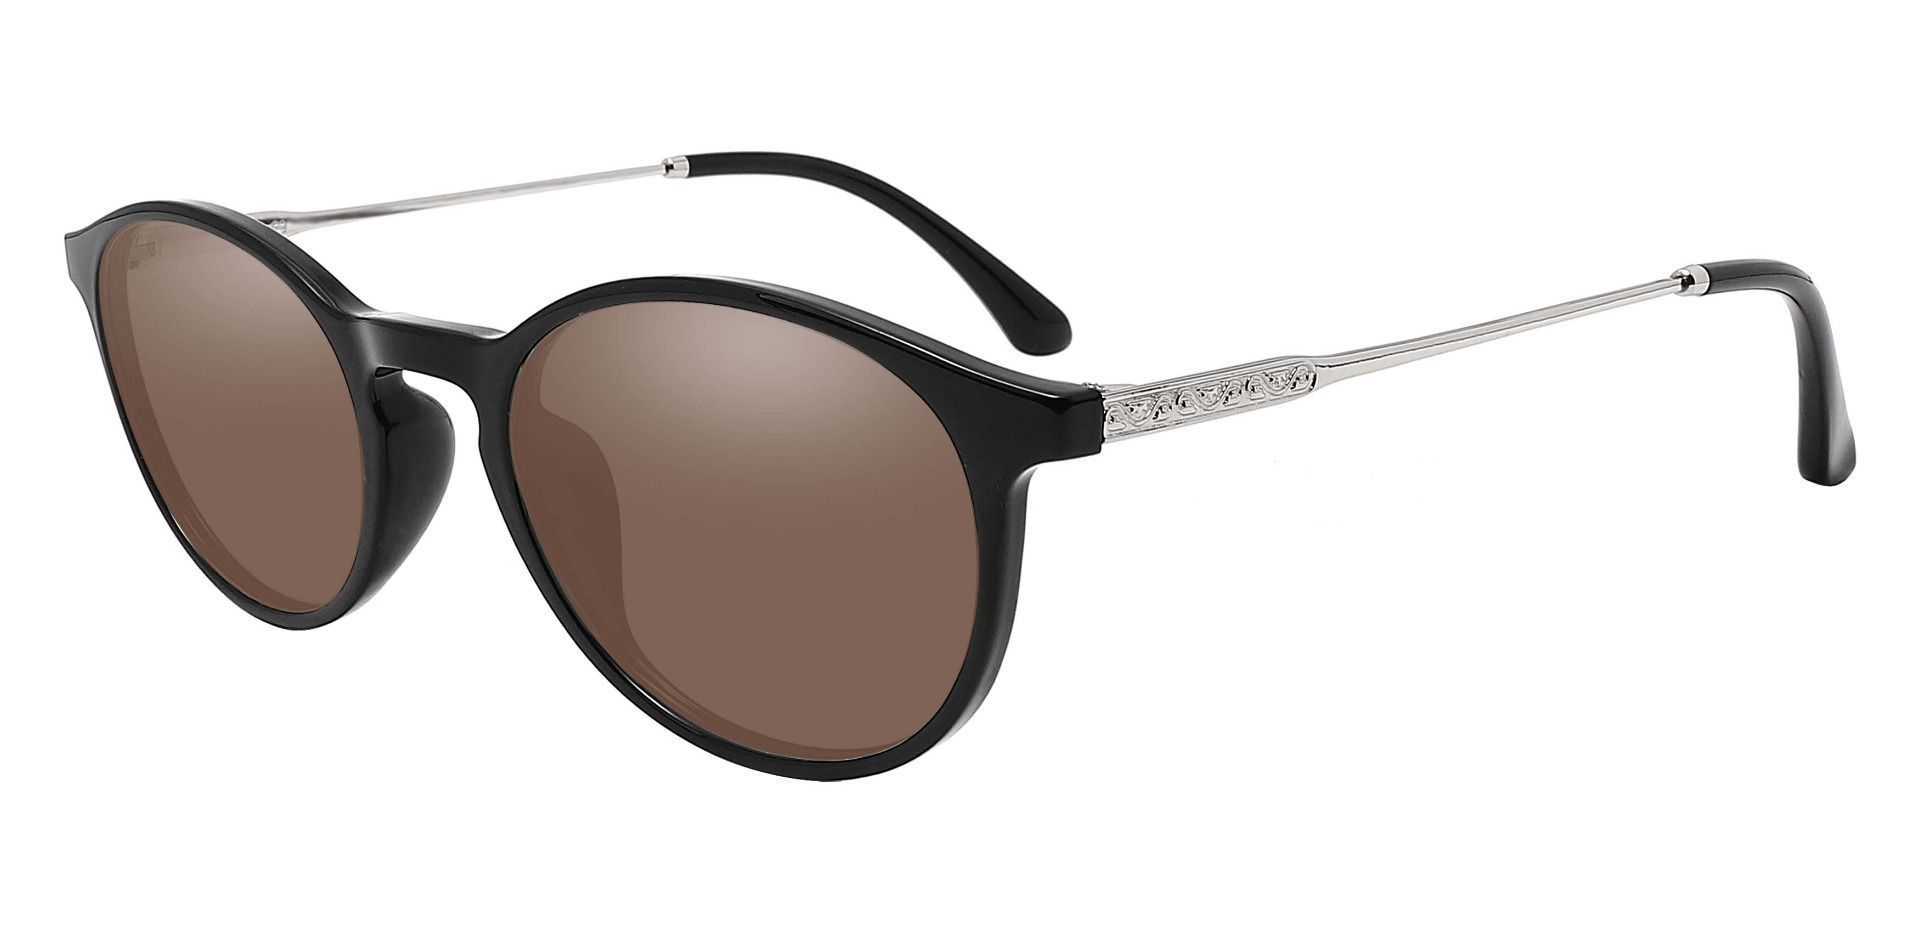 Felton Oval Lined Bifocal Sunglasses - Black Frame With Brown Lenses